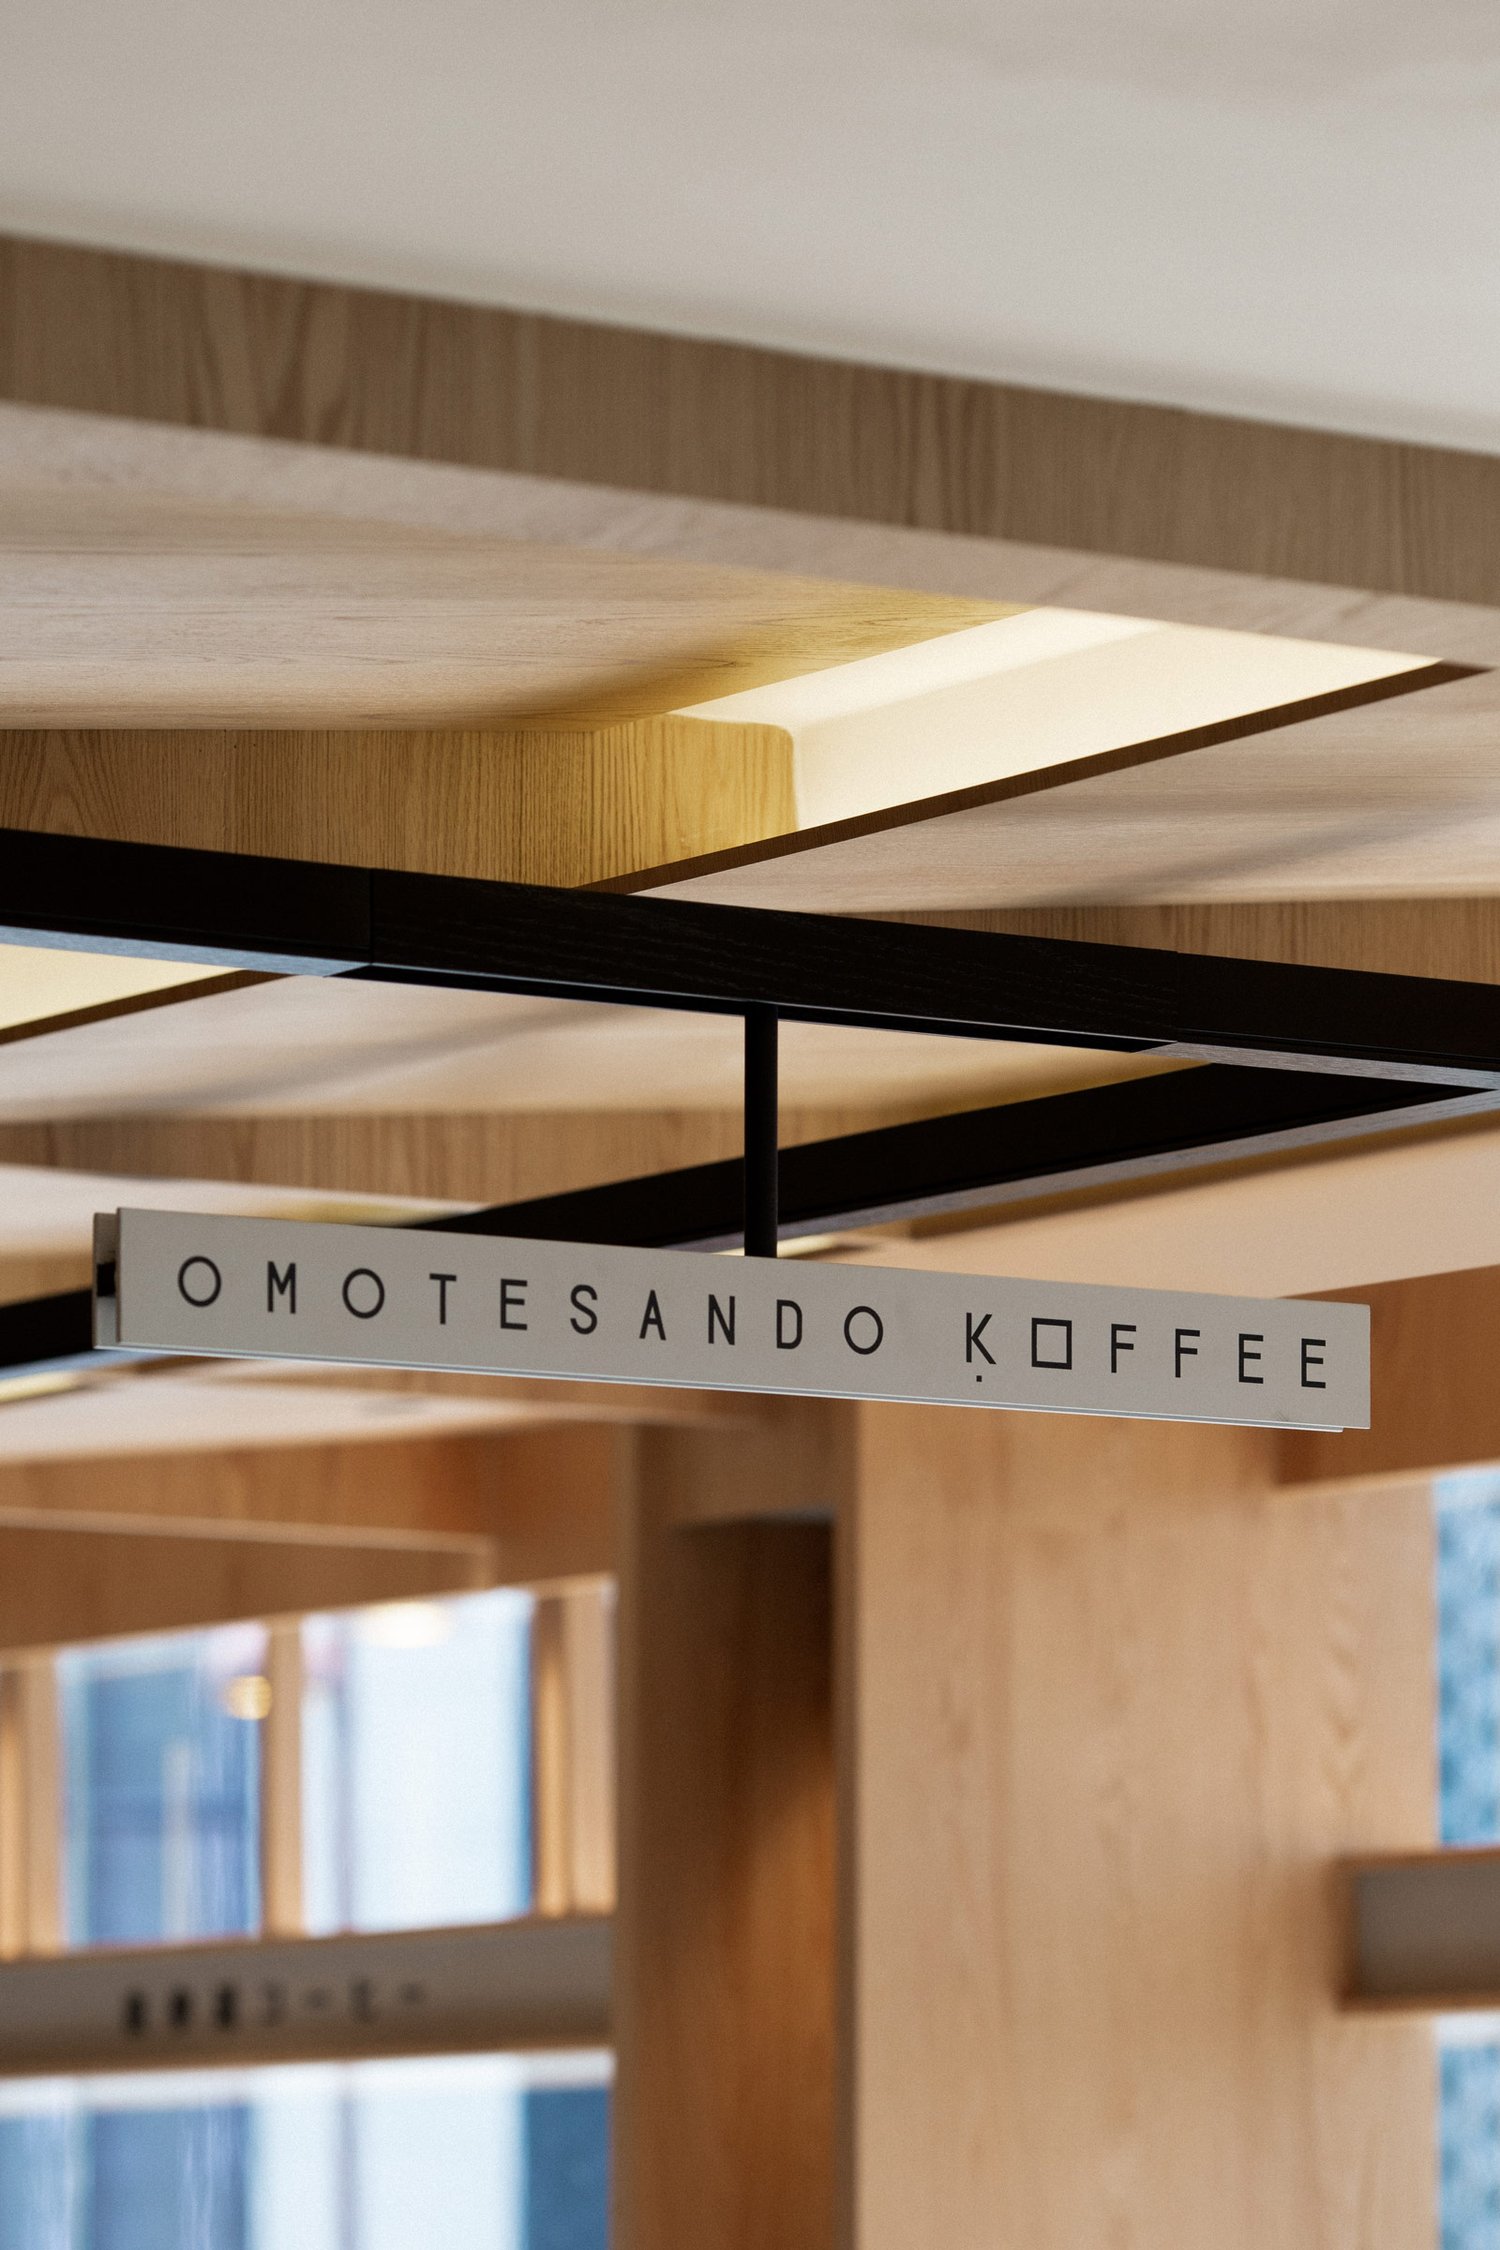 STUDIO ADJECTIVE,香港,咖啡厅设计案例,Omotesando Koffee,精品咖啡厅,尖沙咀,海港城,咖啡店